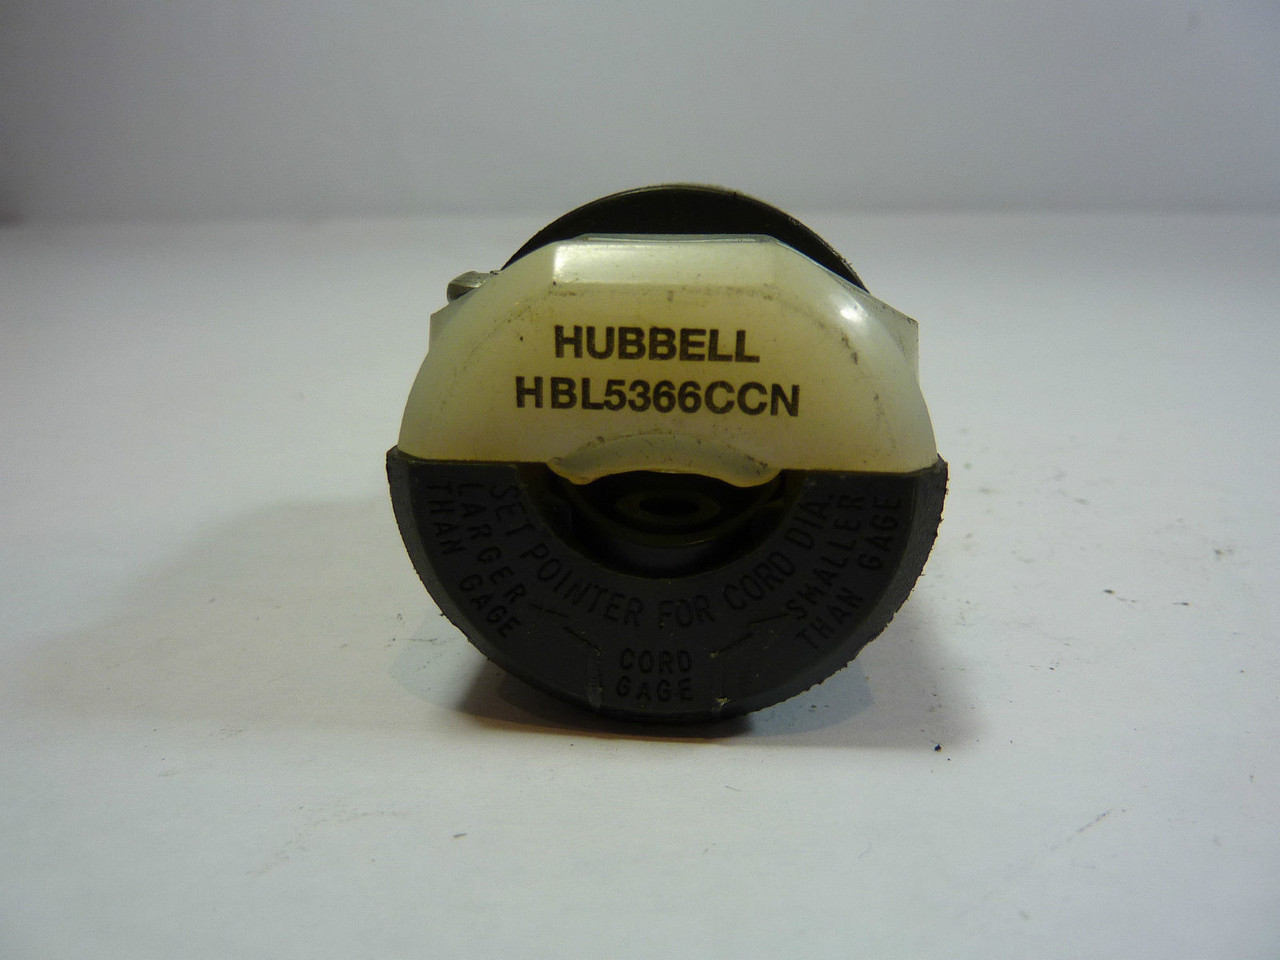 Hubbell HBL5366CCN Plug 20 Amp 125V USED